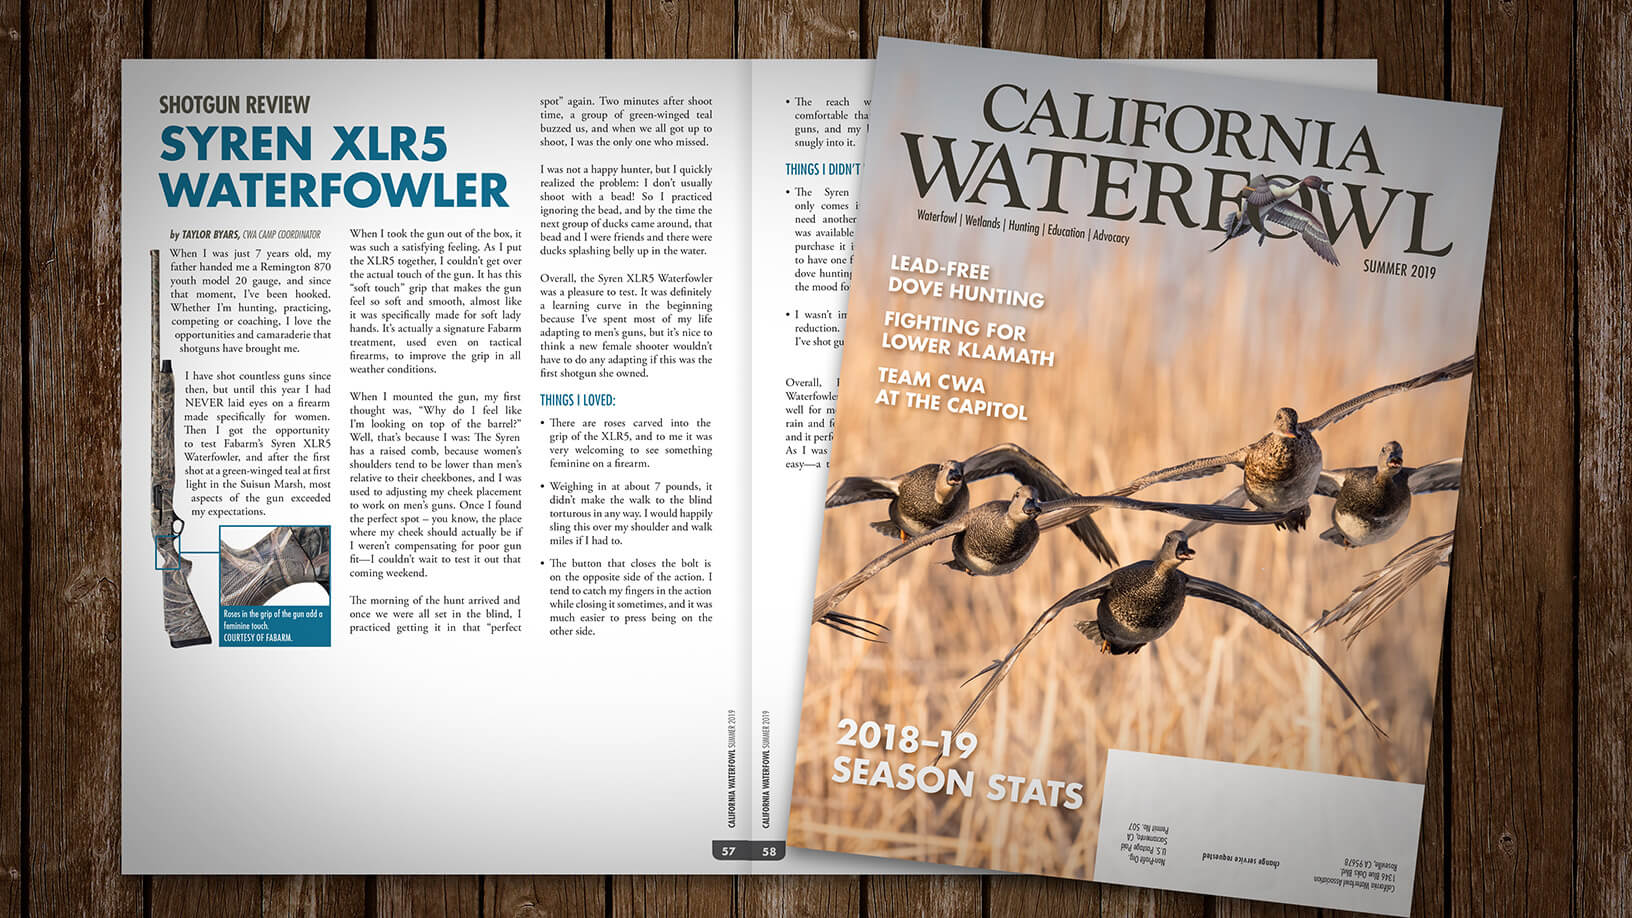 [California Waterfowl] Shotgun Review: Syren XLR5 Waterfowler